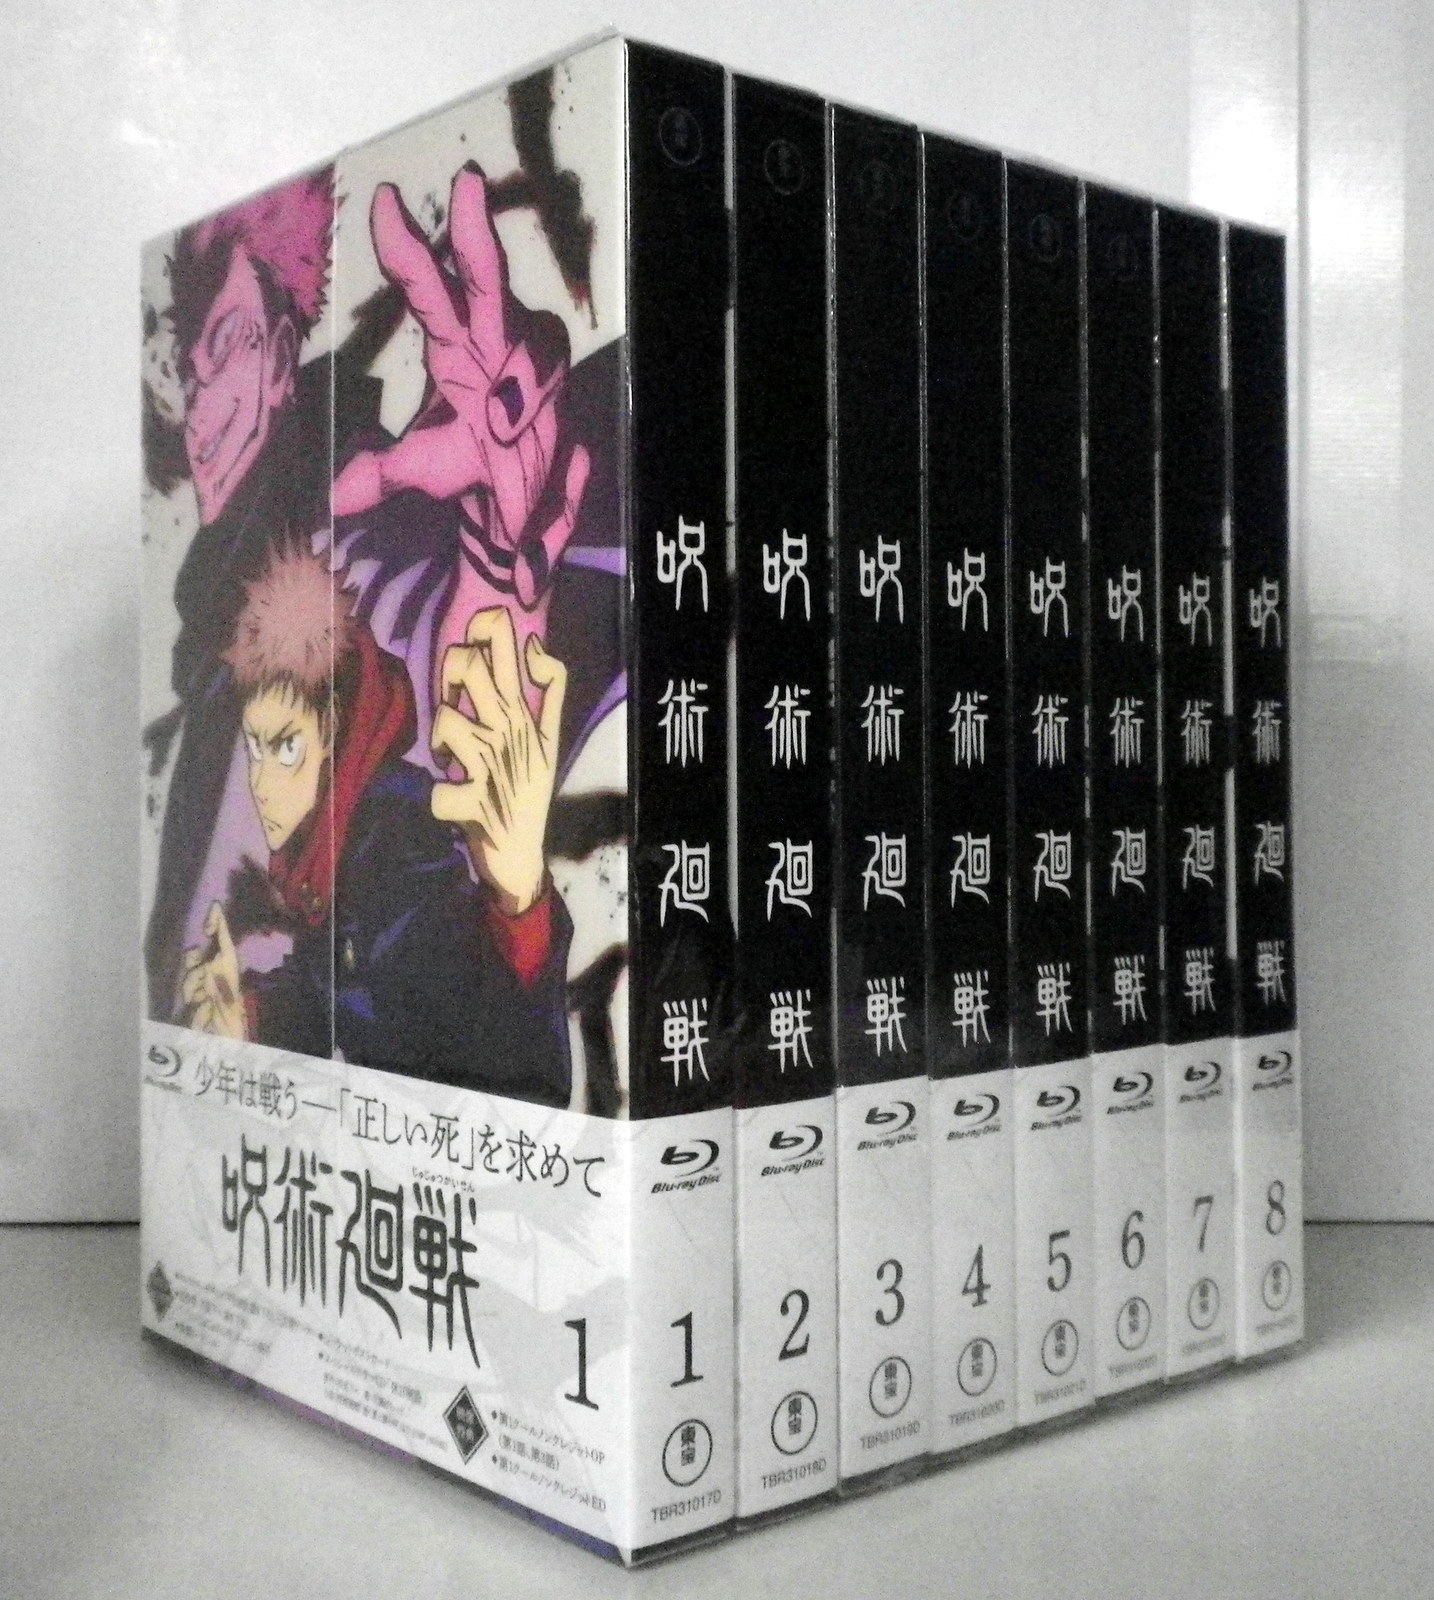 呪術廻戦 Blu-ray 1巻〜8巻セット 初回生産限定盤 www.browhenna.it